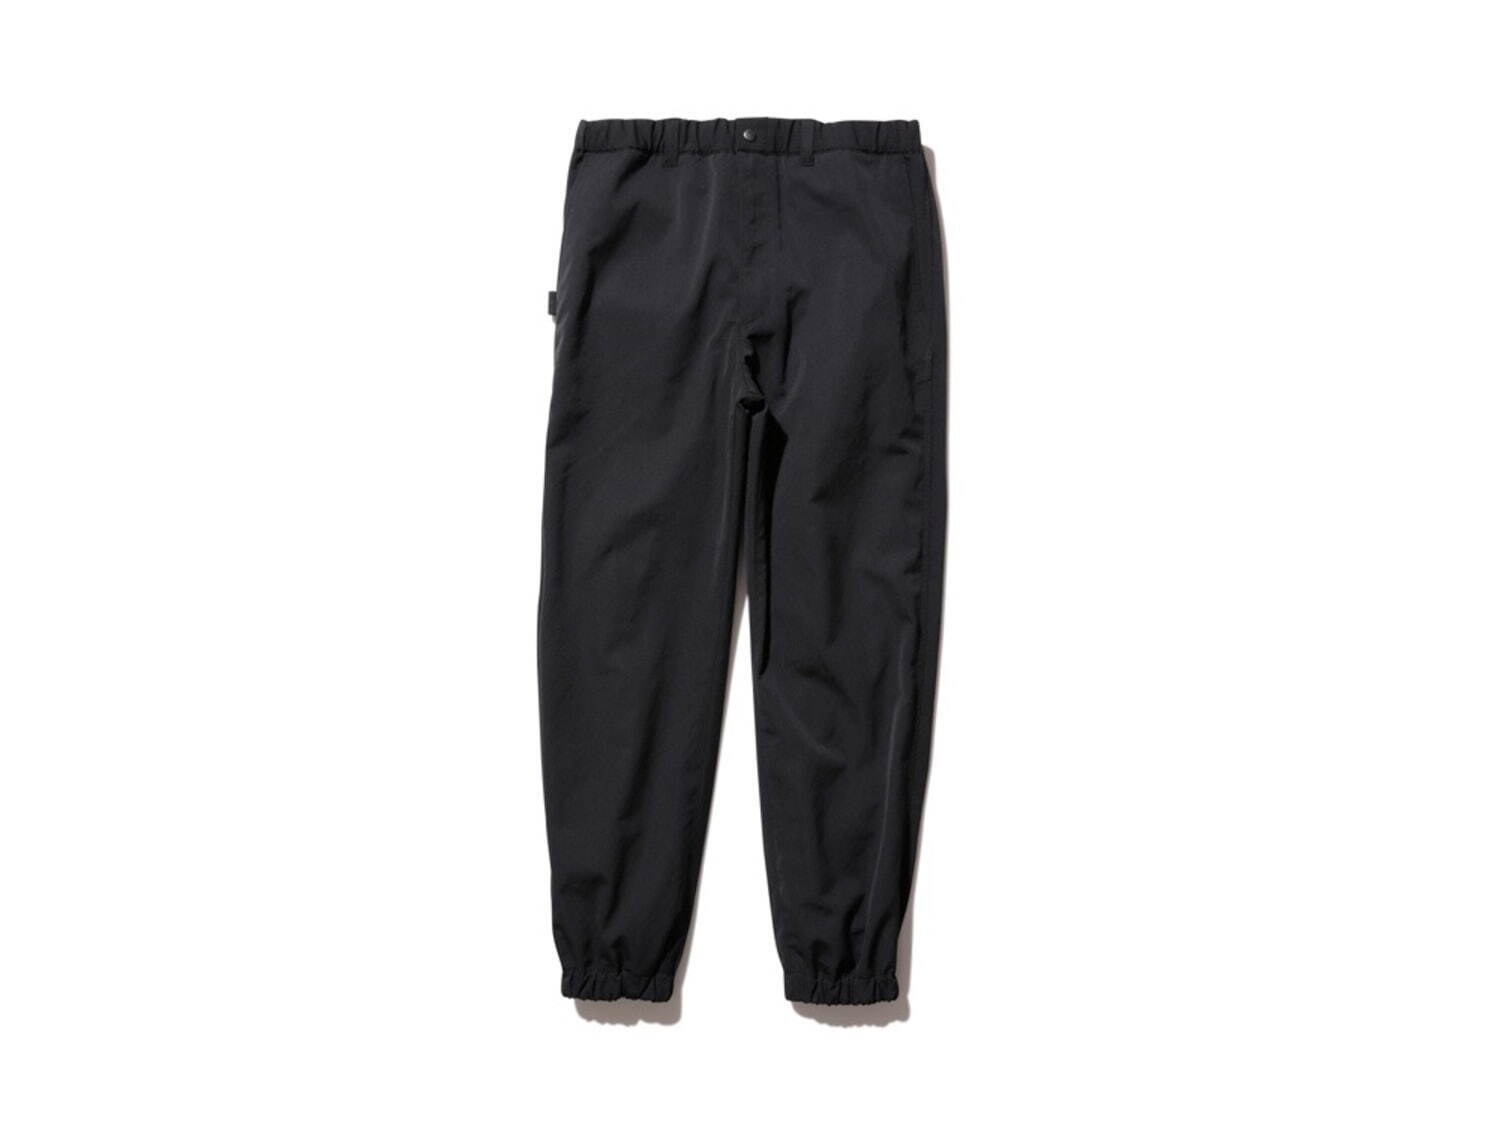 「TAKIBI Weather Cloth Pants」35,200円